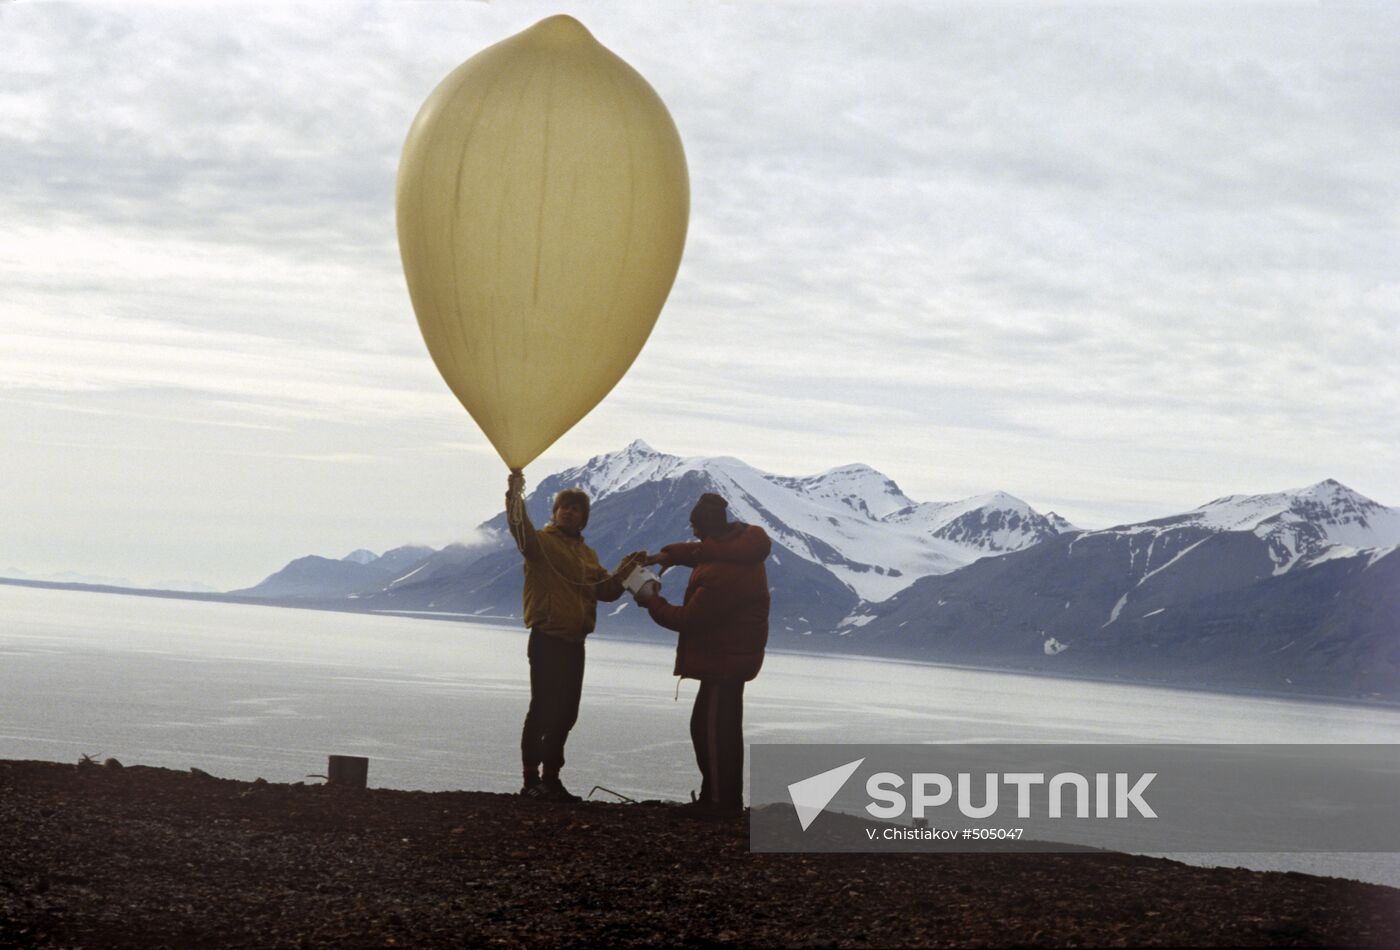 Meteorologists send a sounding balloon aloft